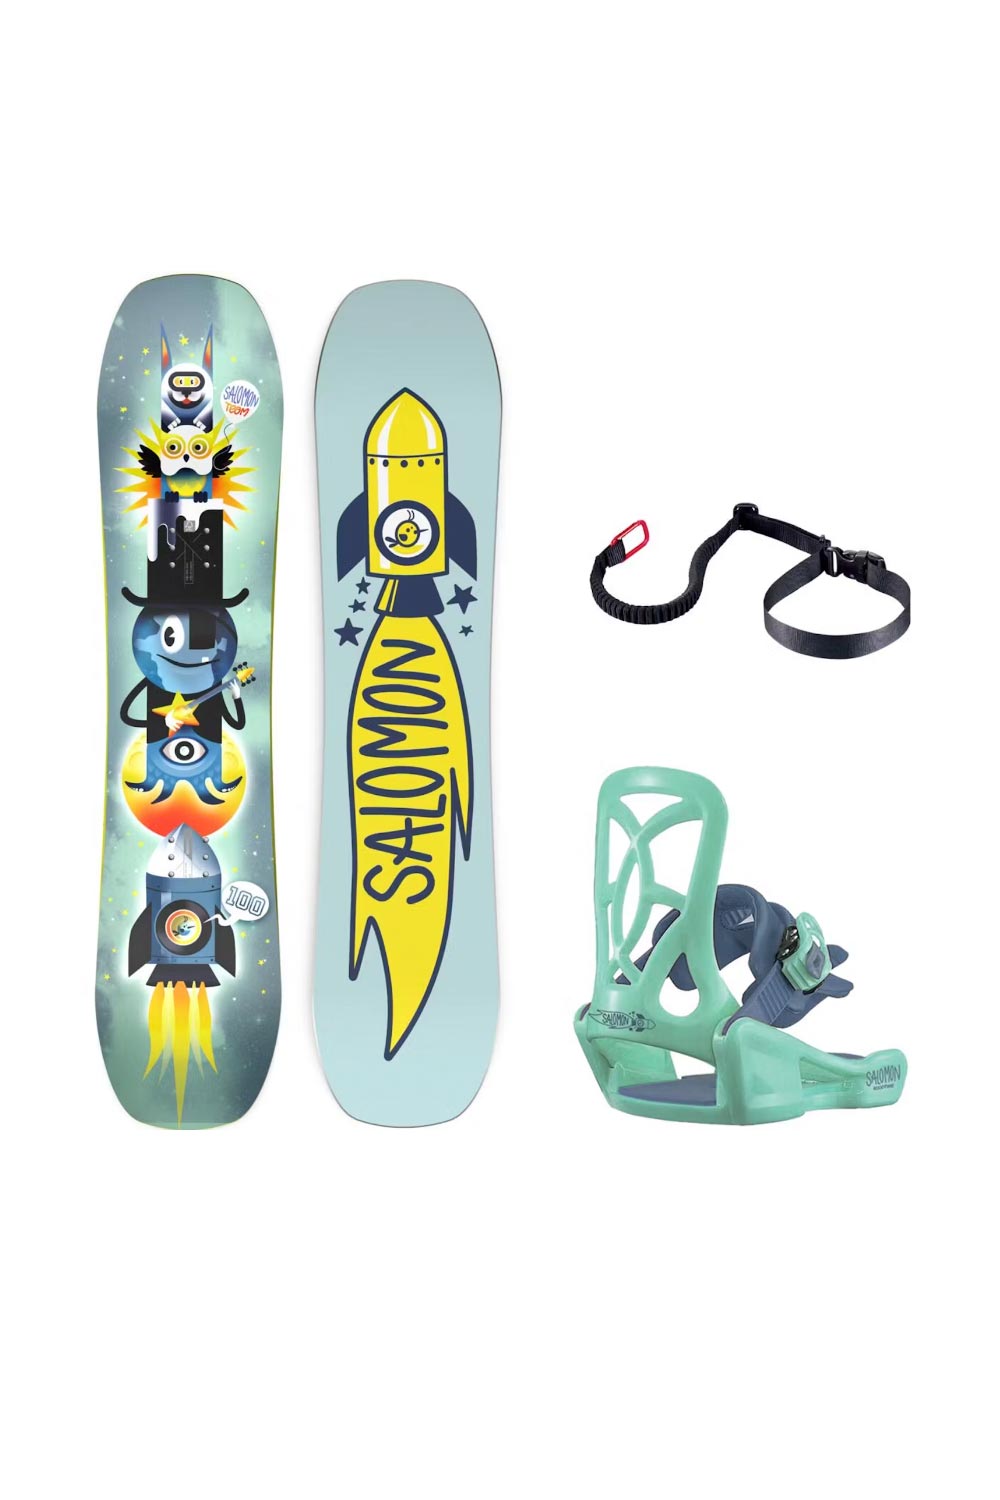 Salomon Team kids snowboard package includes board, bindings and leash